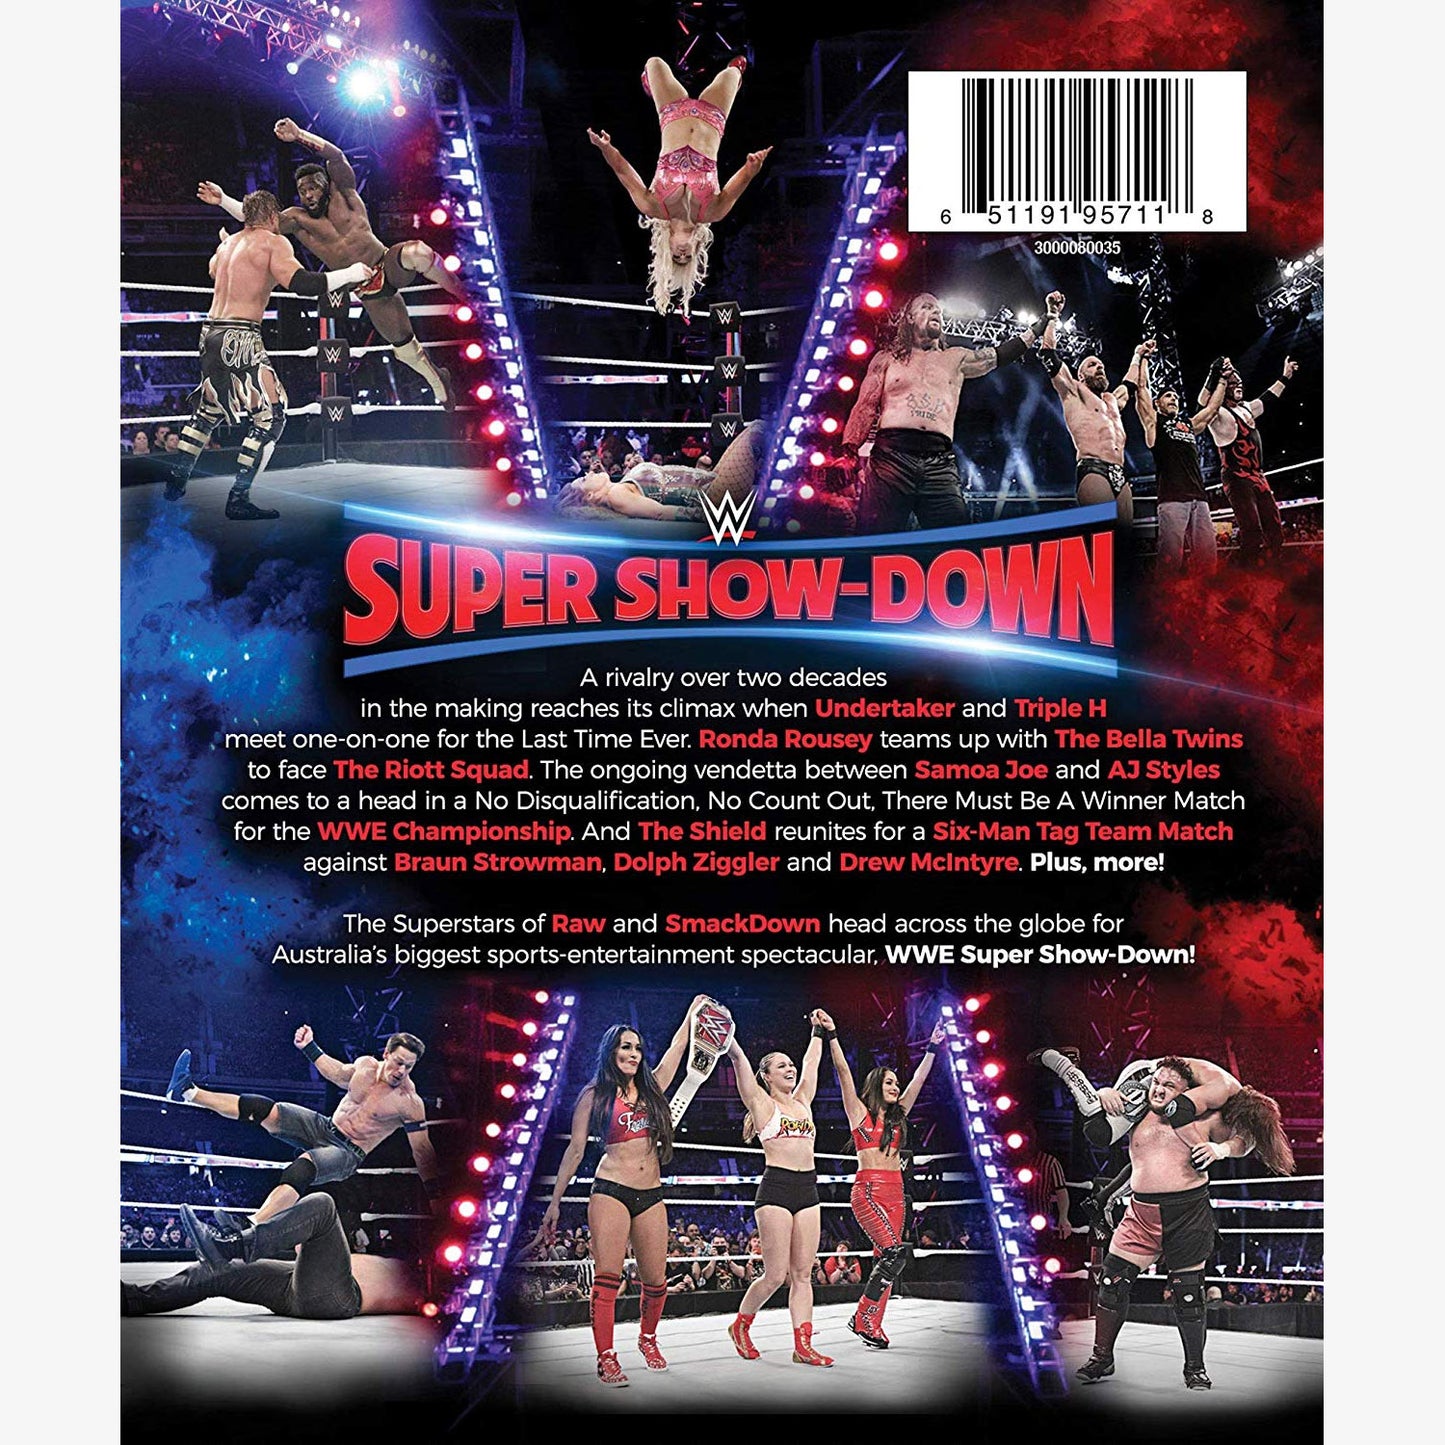 WWE Super Show-Down DVD